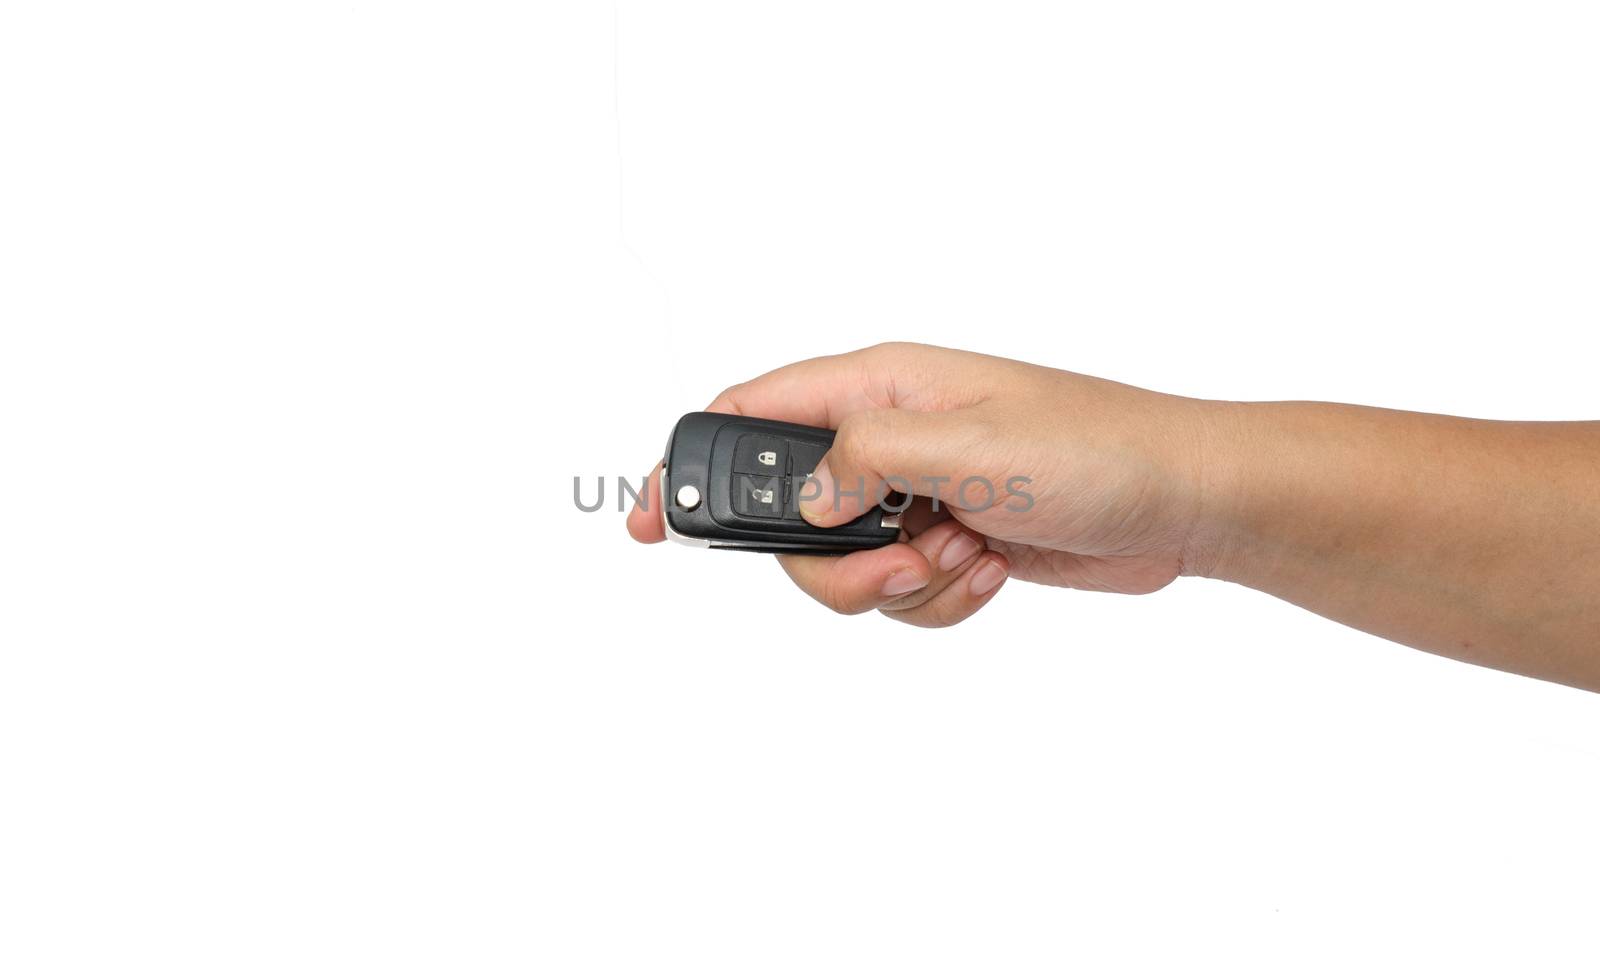  hand holding a car key isolated on white background by photobyphotoboy